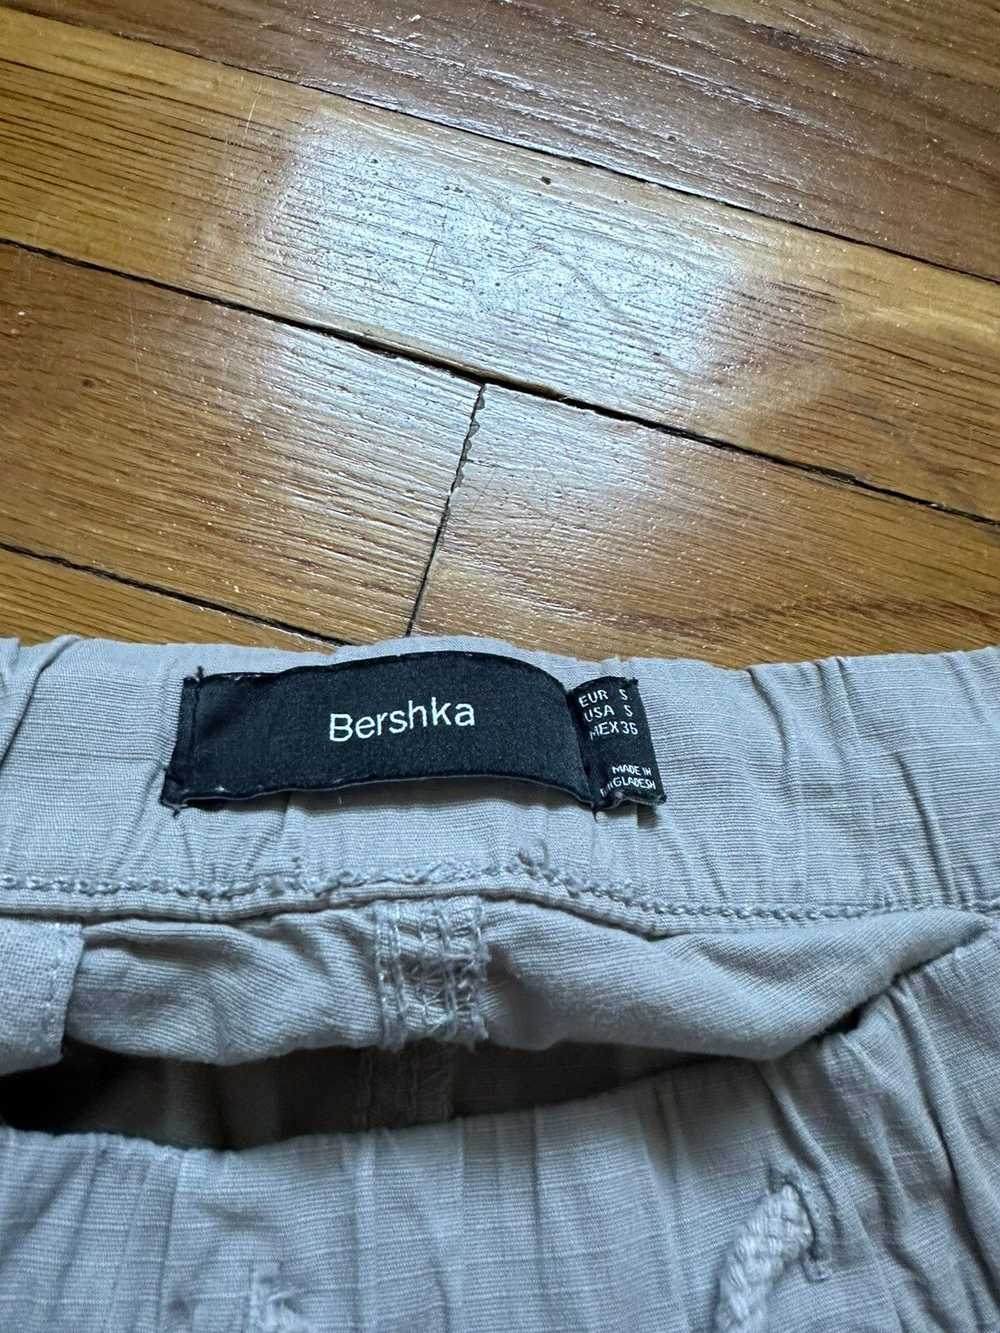 Bershka Bershka Grey Cargo Pants - image 3